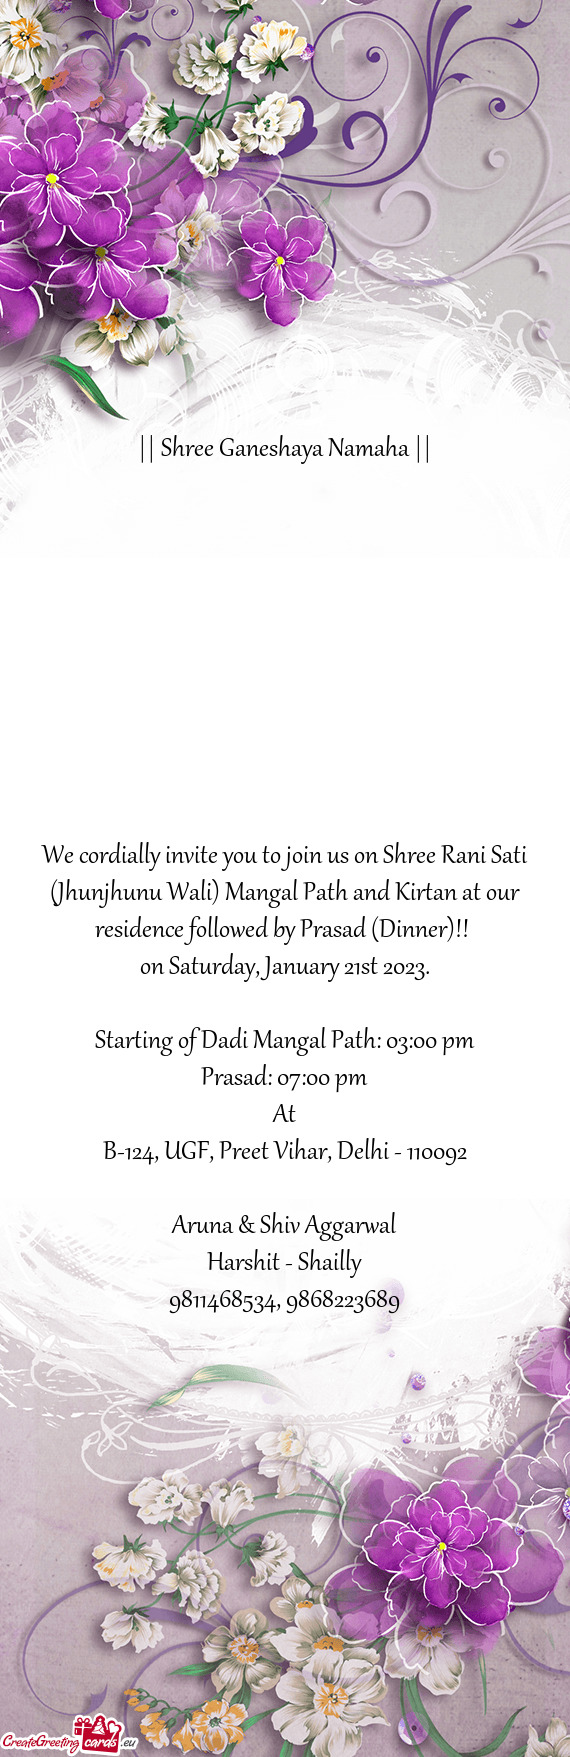 We cordially invite you to join us on Shree Rani Sati (Jhunjhunu Wali) Mangal Path and Kirtan at our